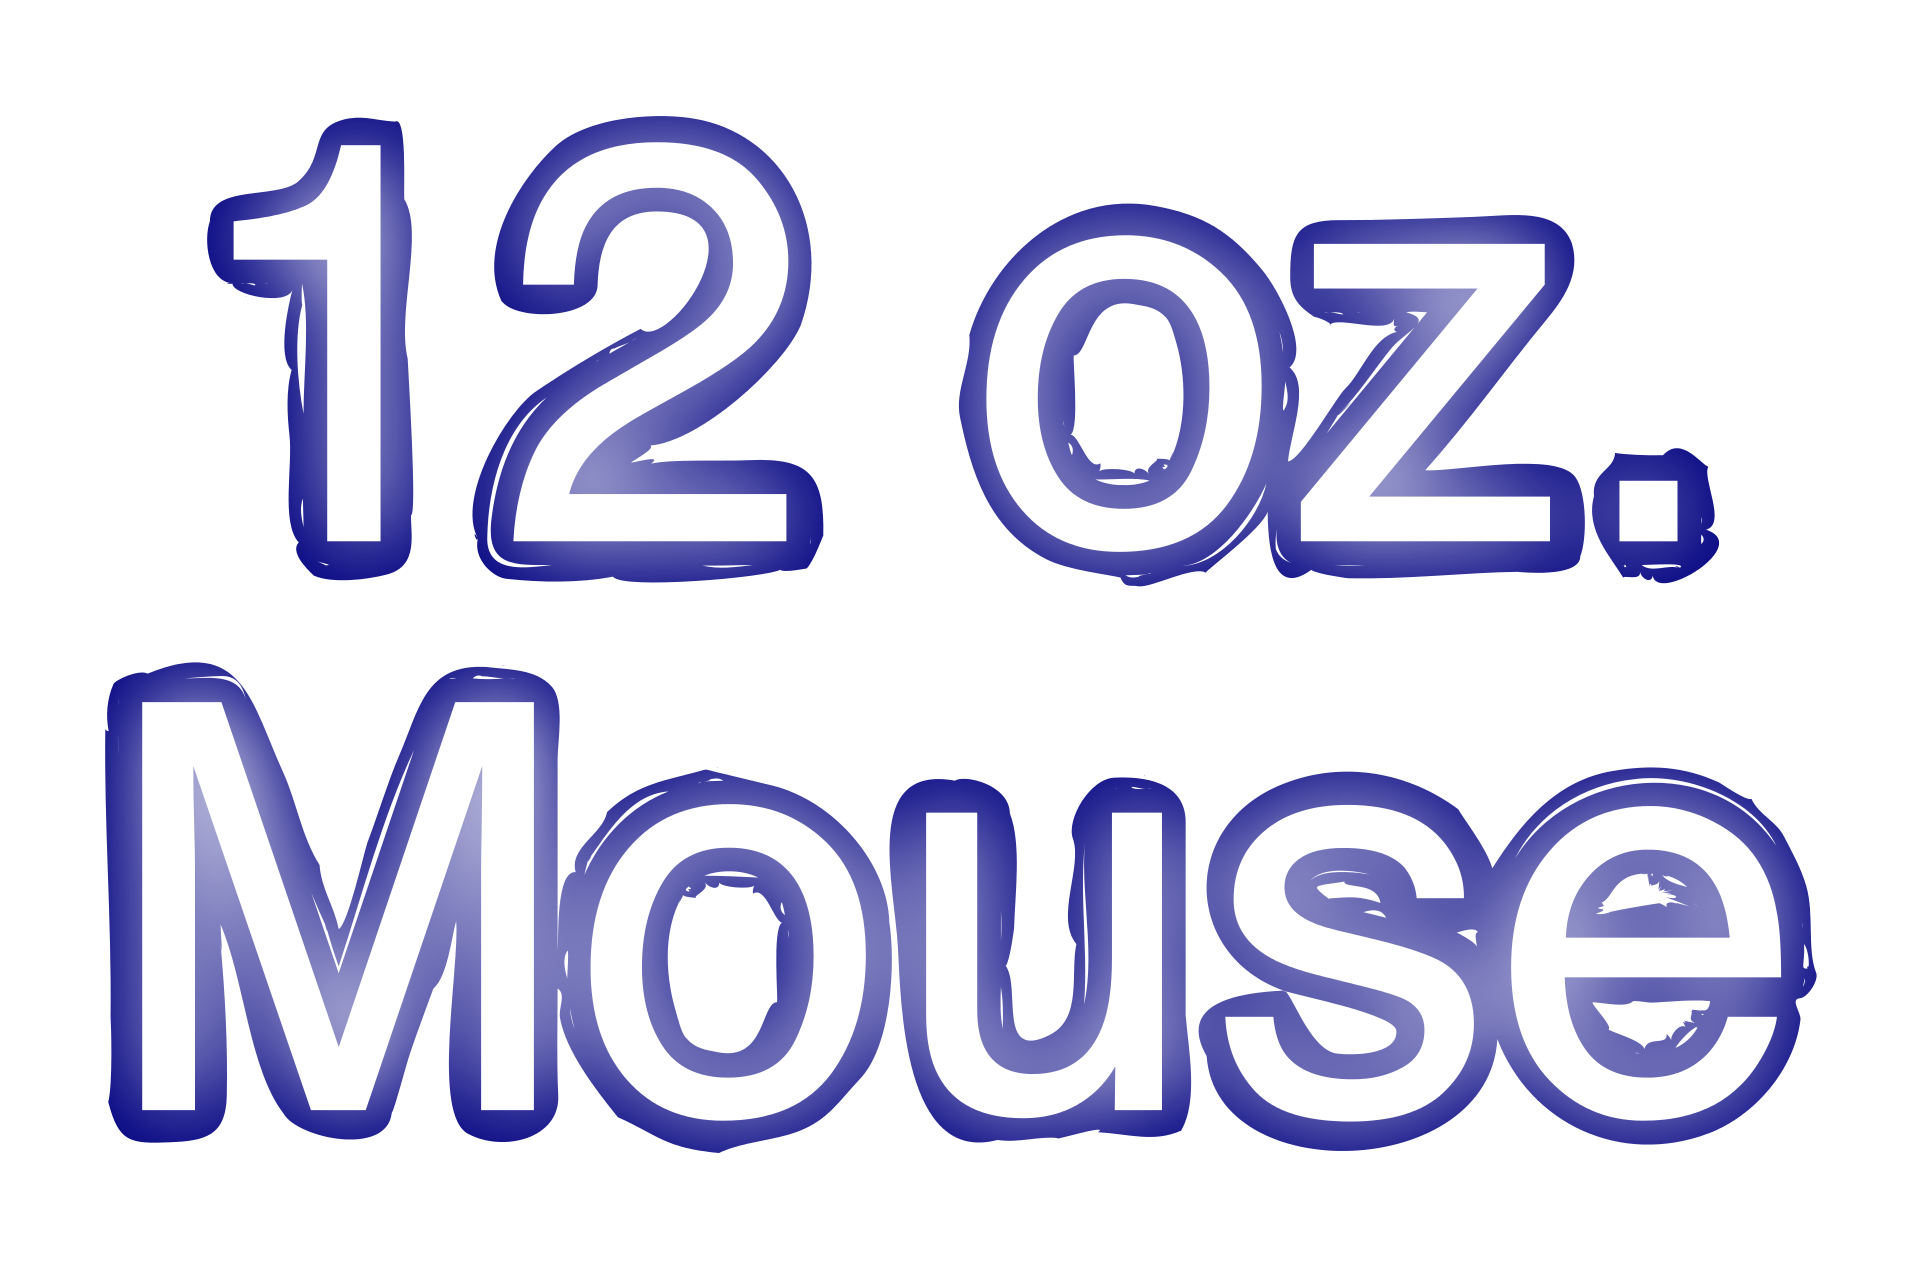 12 oz mouse Logo photo - 1